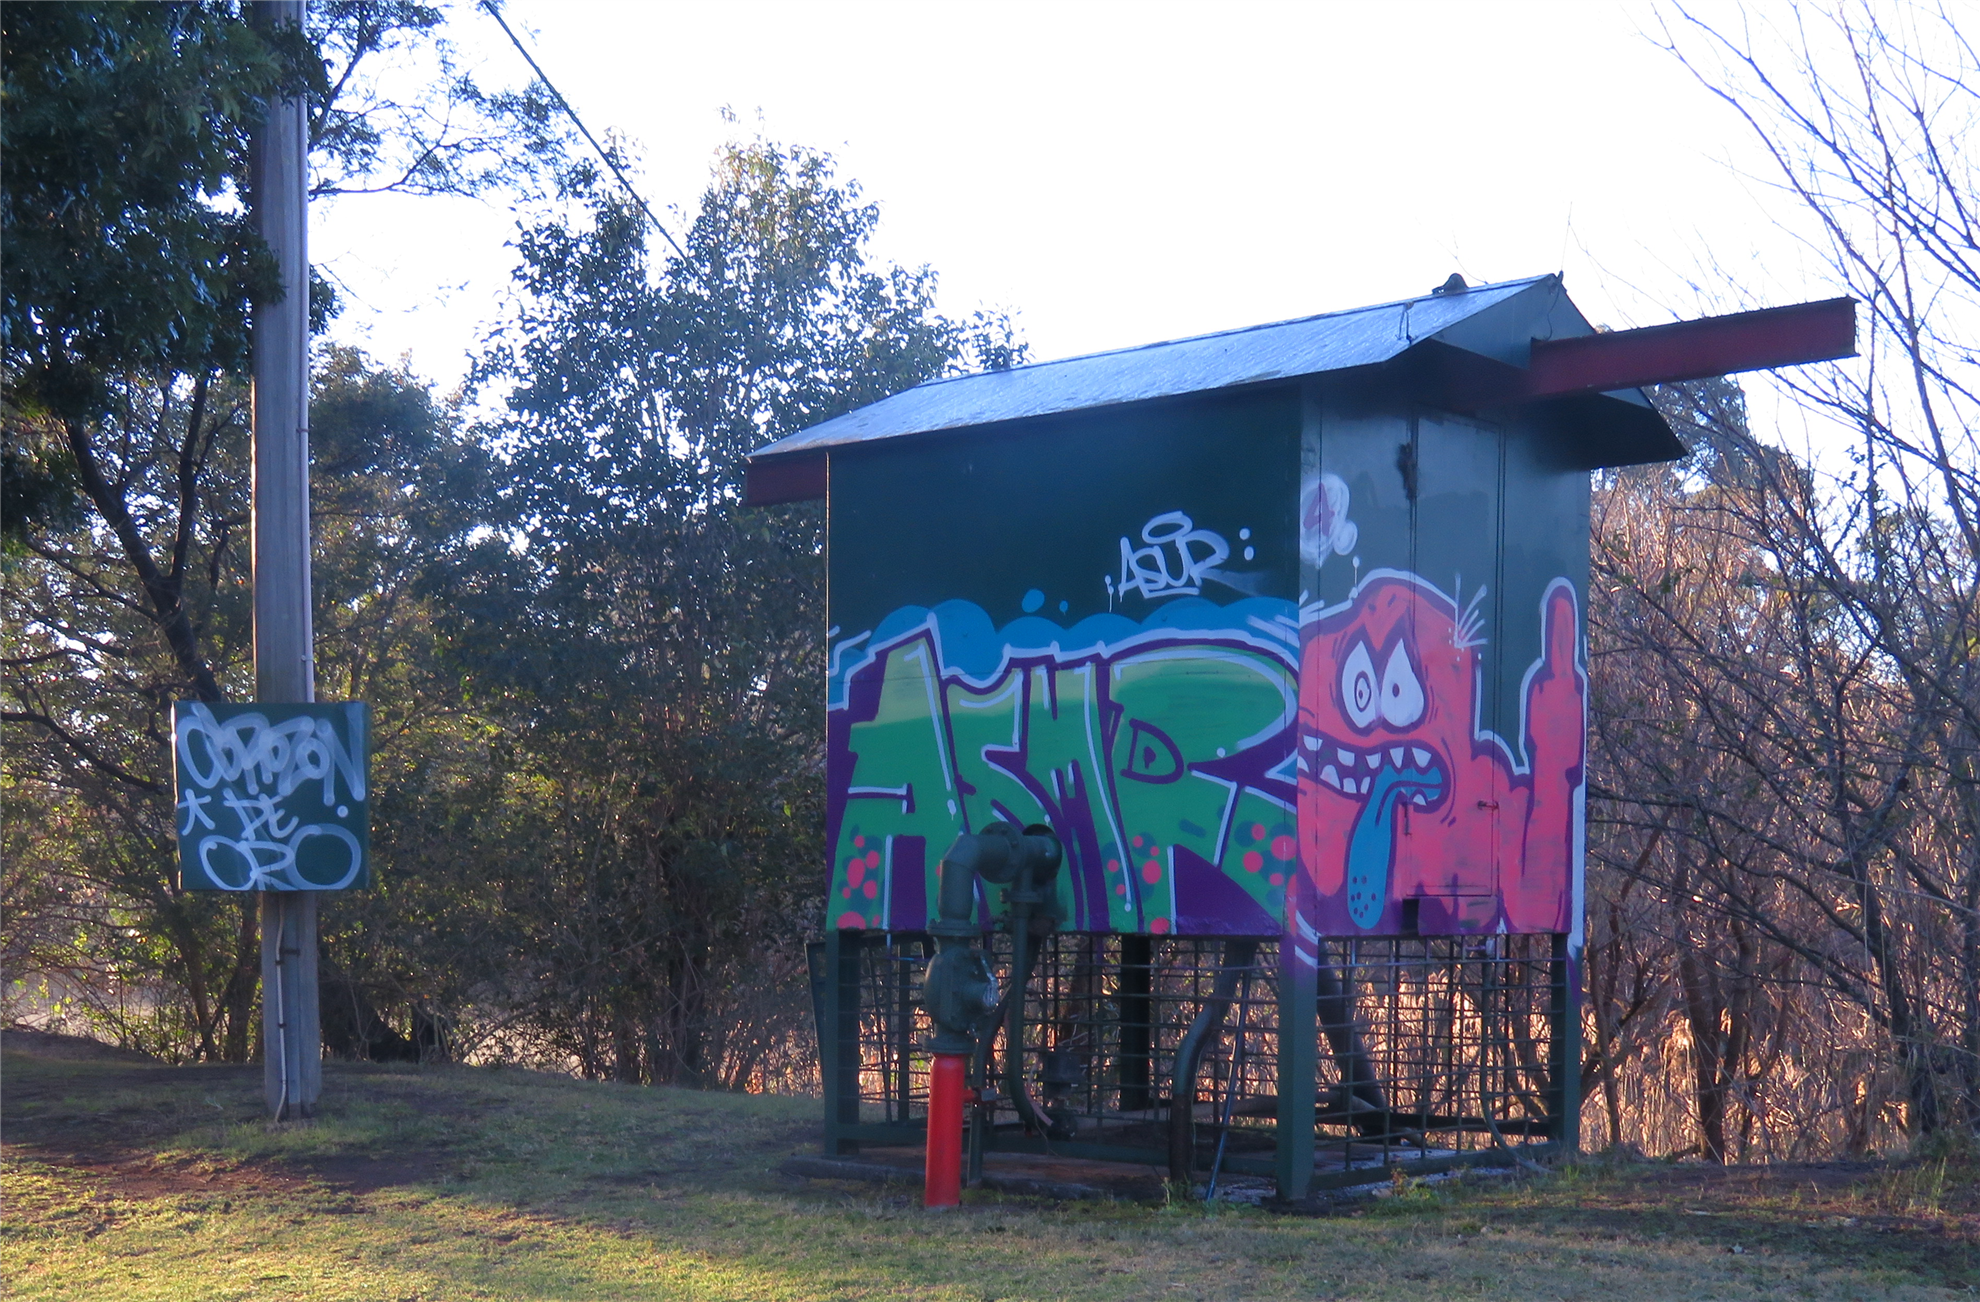 Example of local graffiti